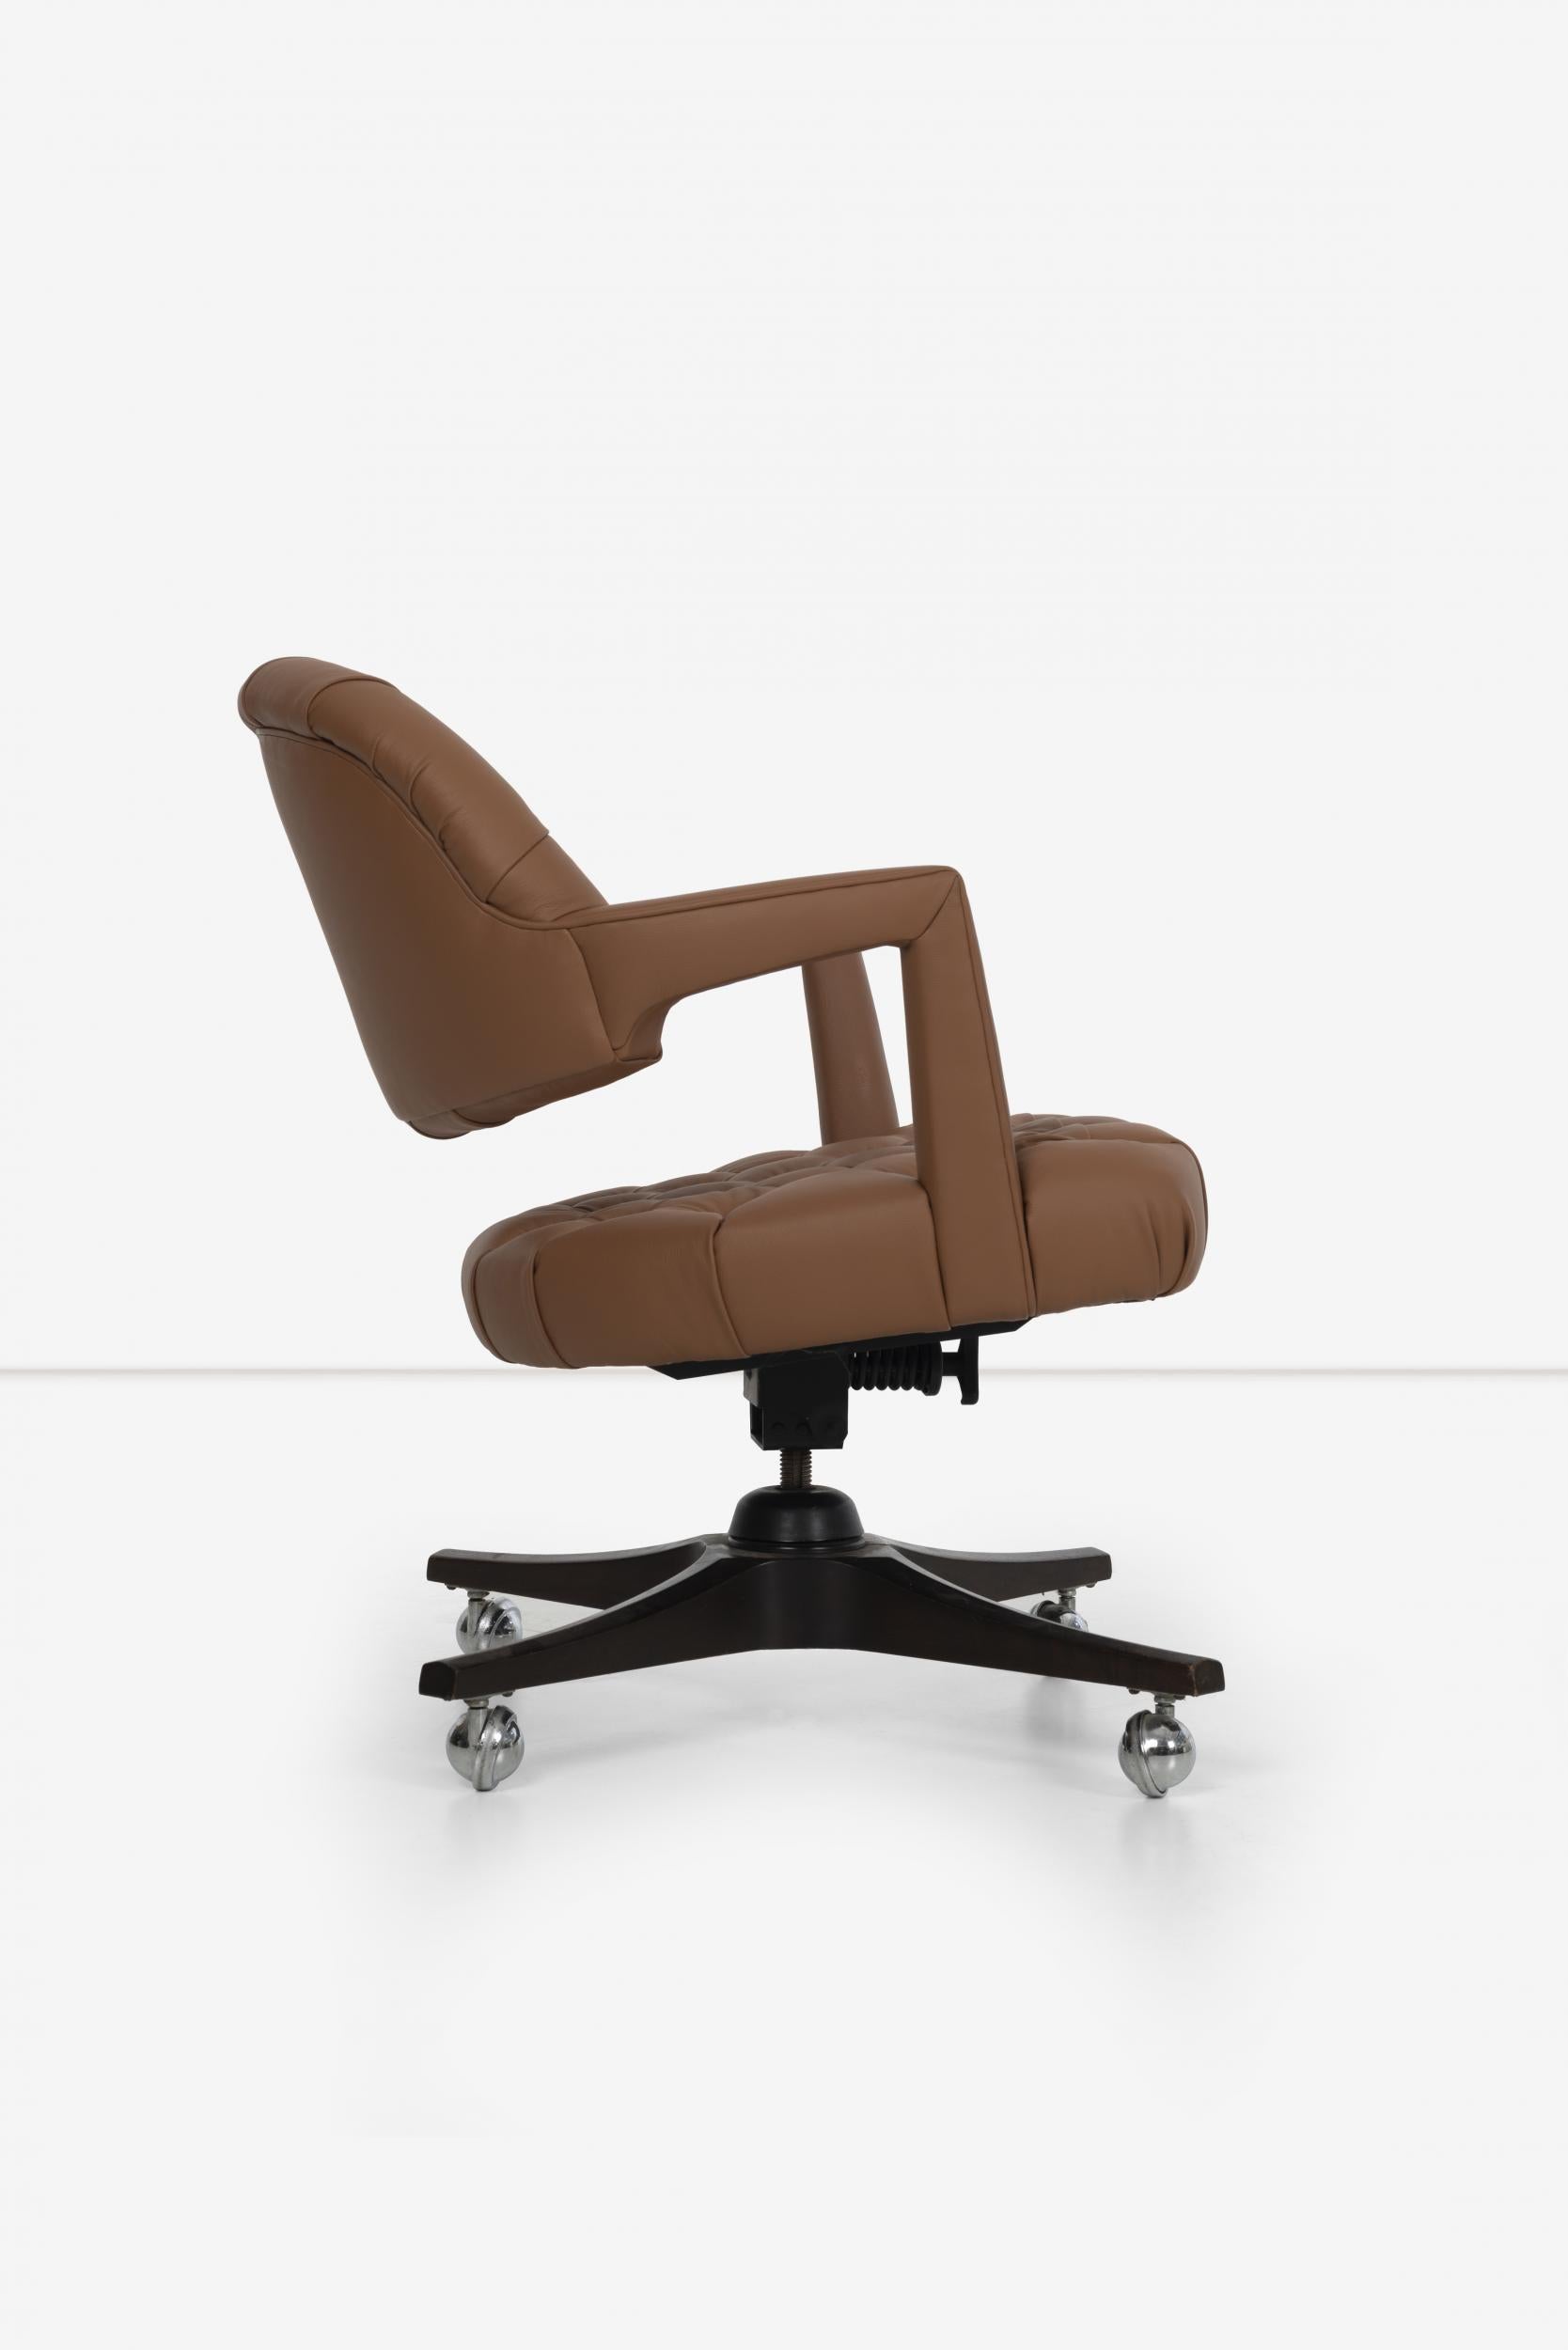 Appliqué Edward Wormley for Dunbar Tufted Cantilevered Desk Chair in Spinneybeck Saddle L For Sale